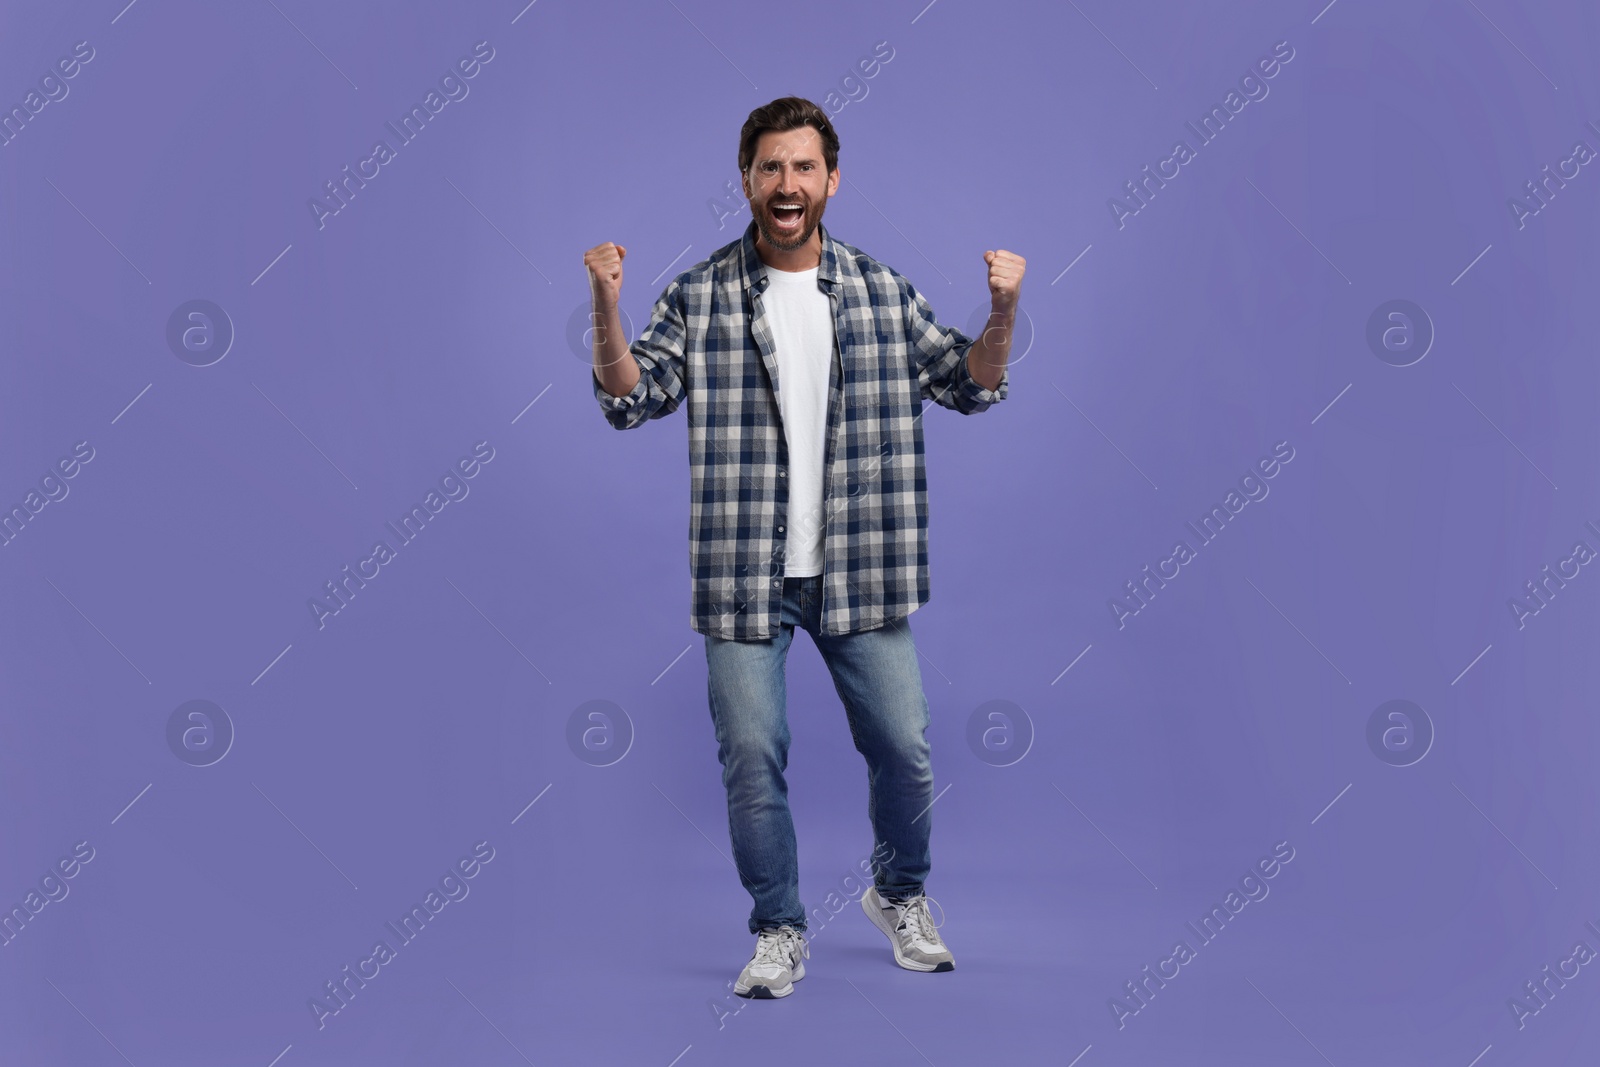 Photo of Emotional sports fan celebrating on purple background